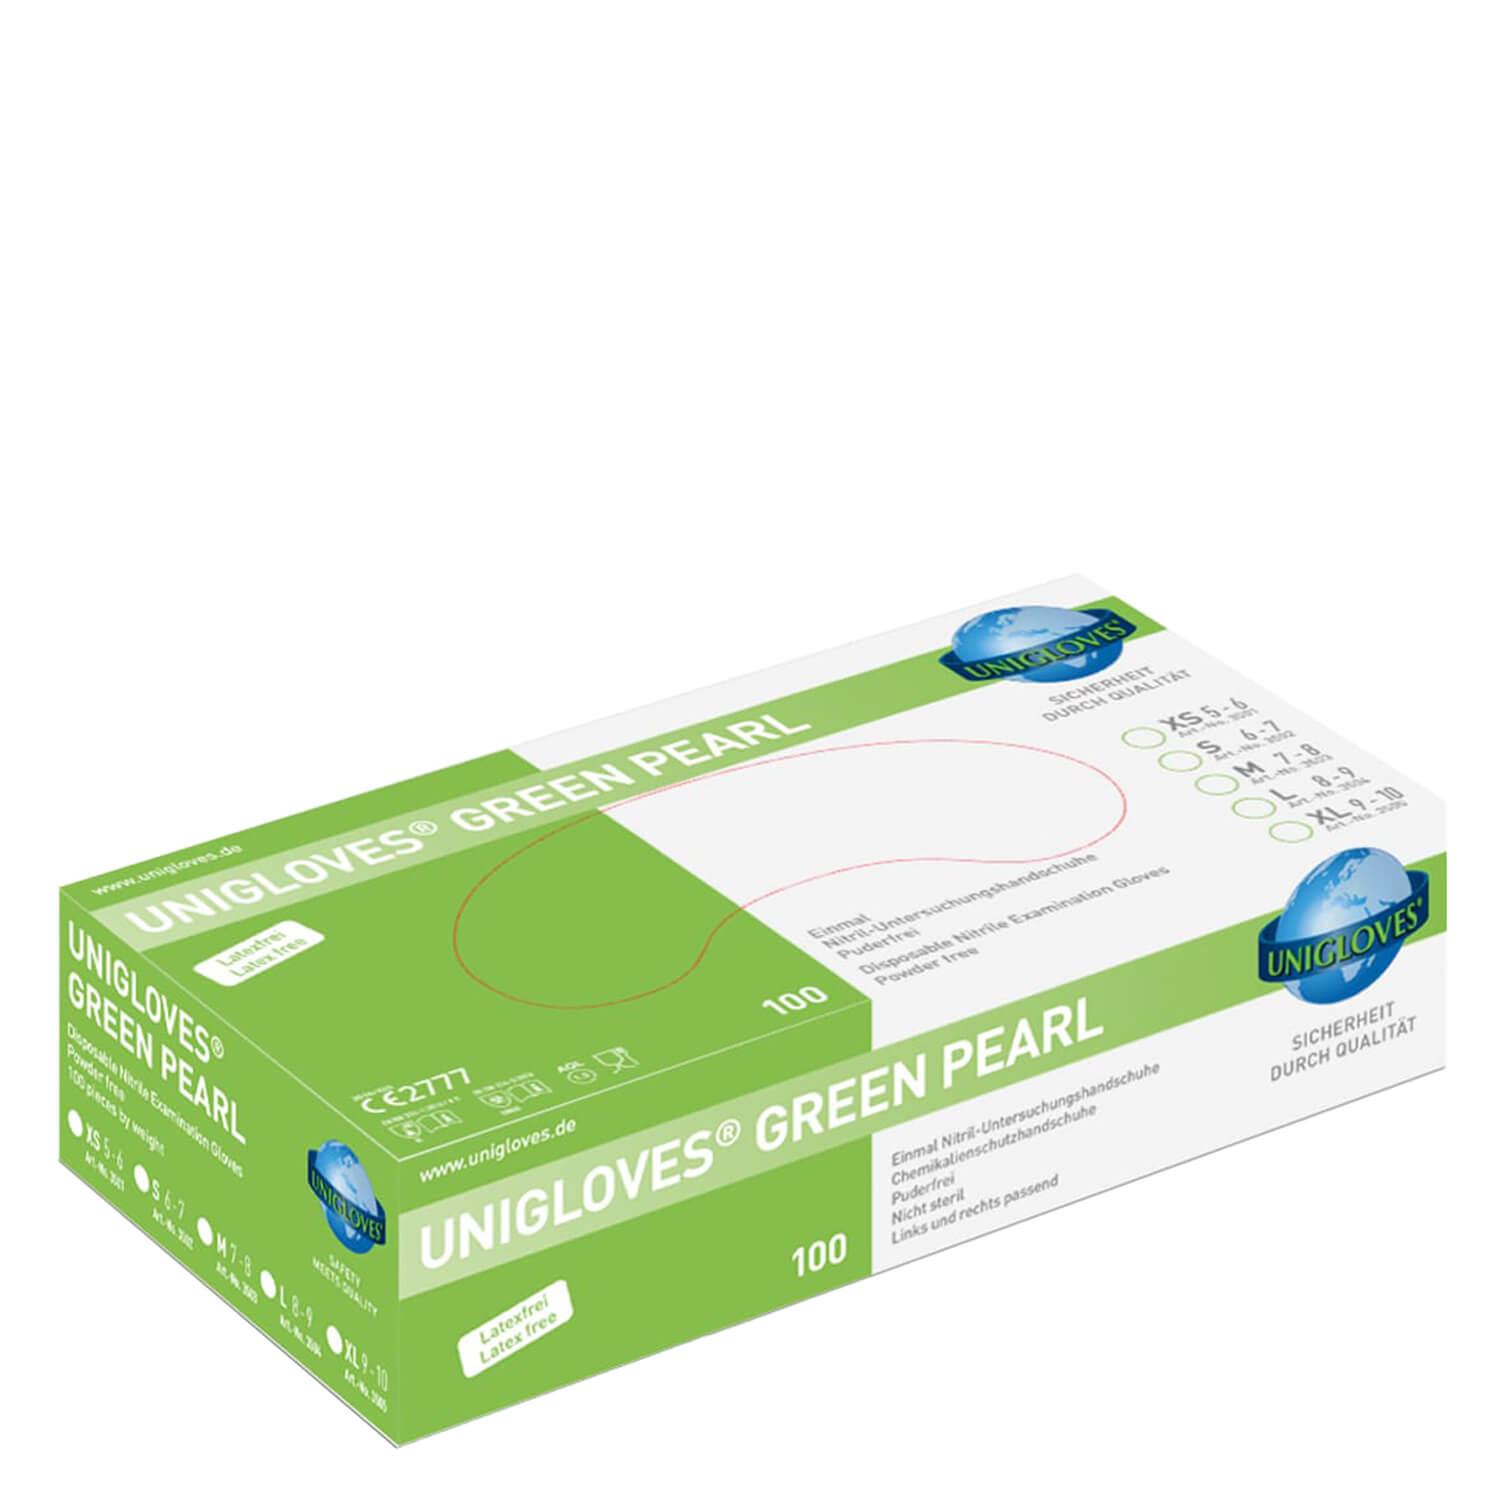 MedBrun - Unigloves  Nitrile Gloves Green Pearl